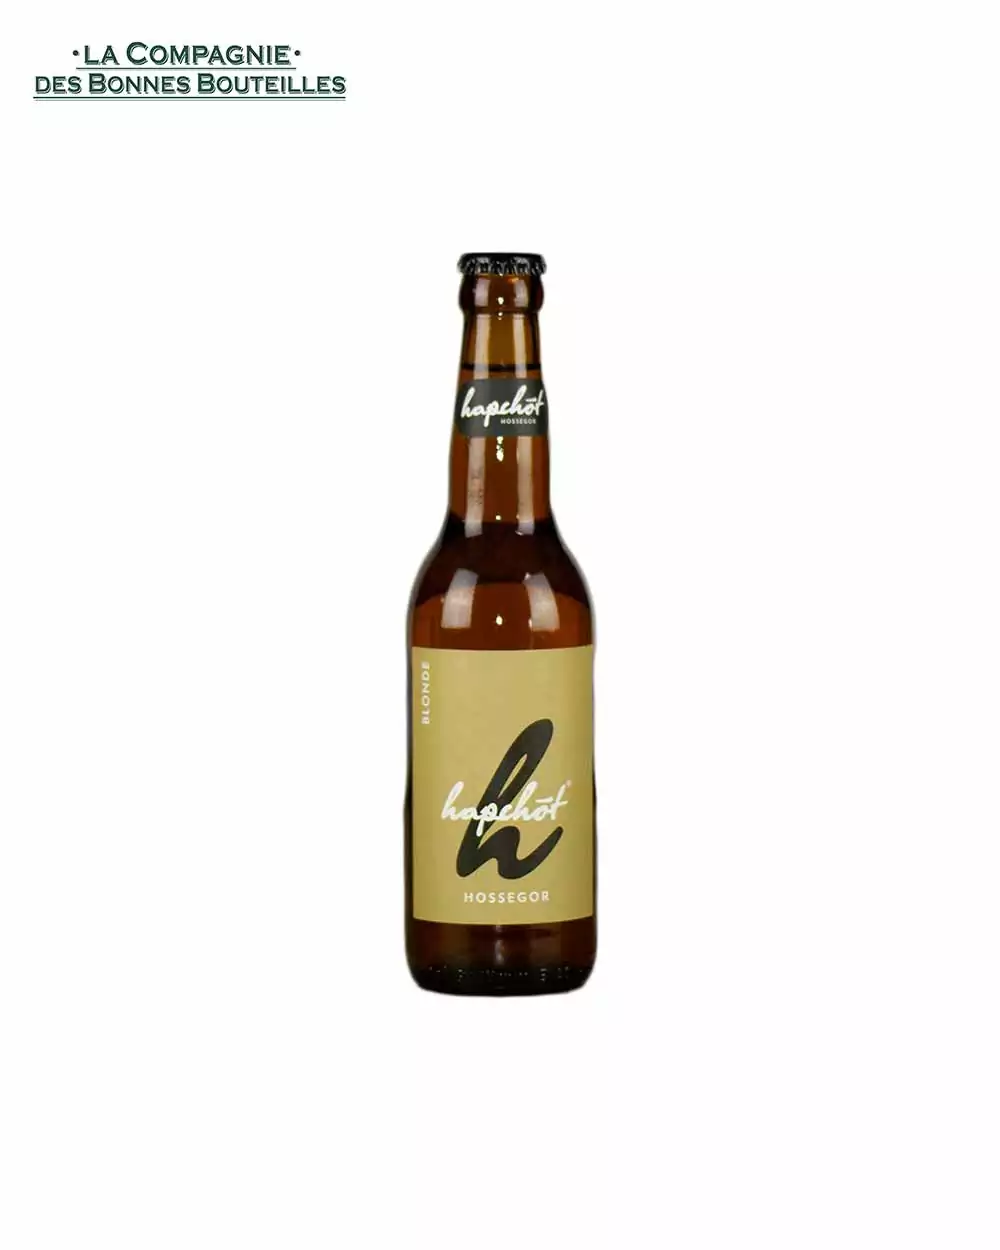 Bière Hapchot blonde VP 33cl